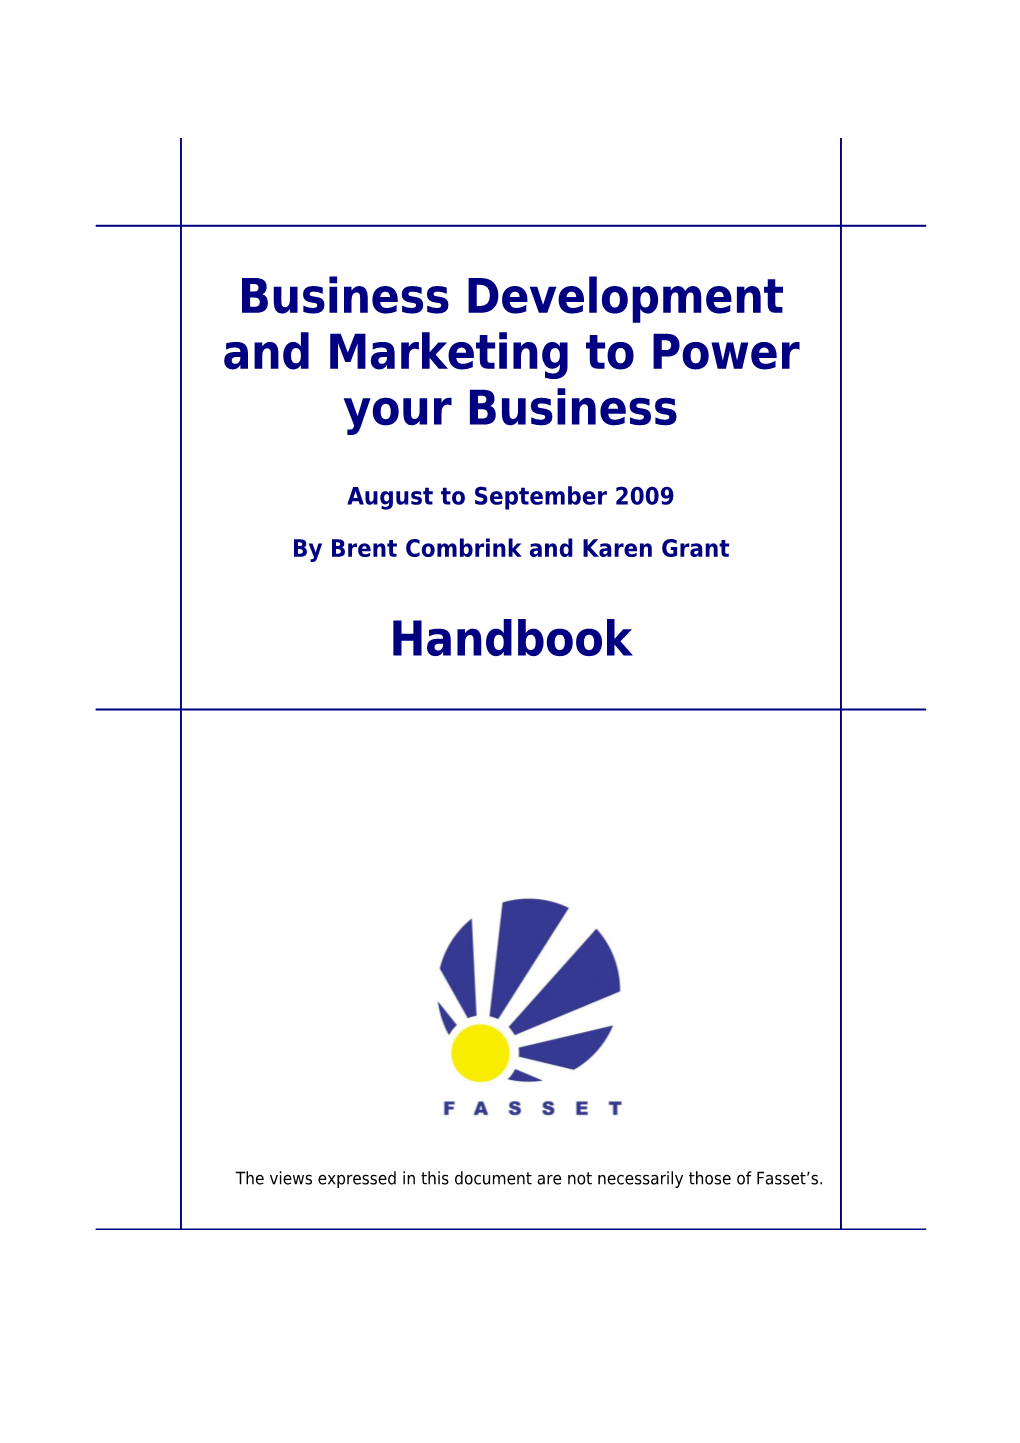 Business Development & Marketing